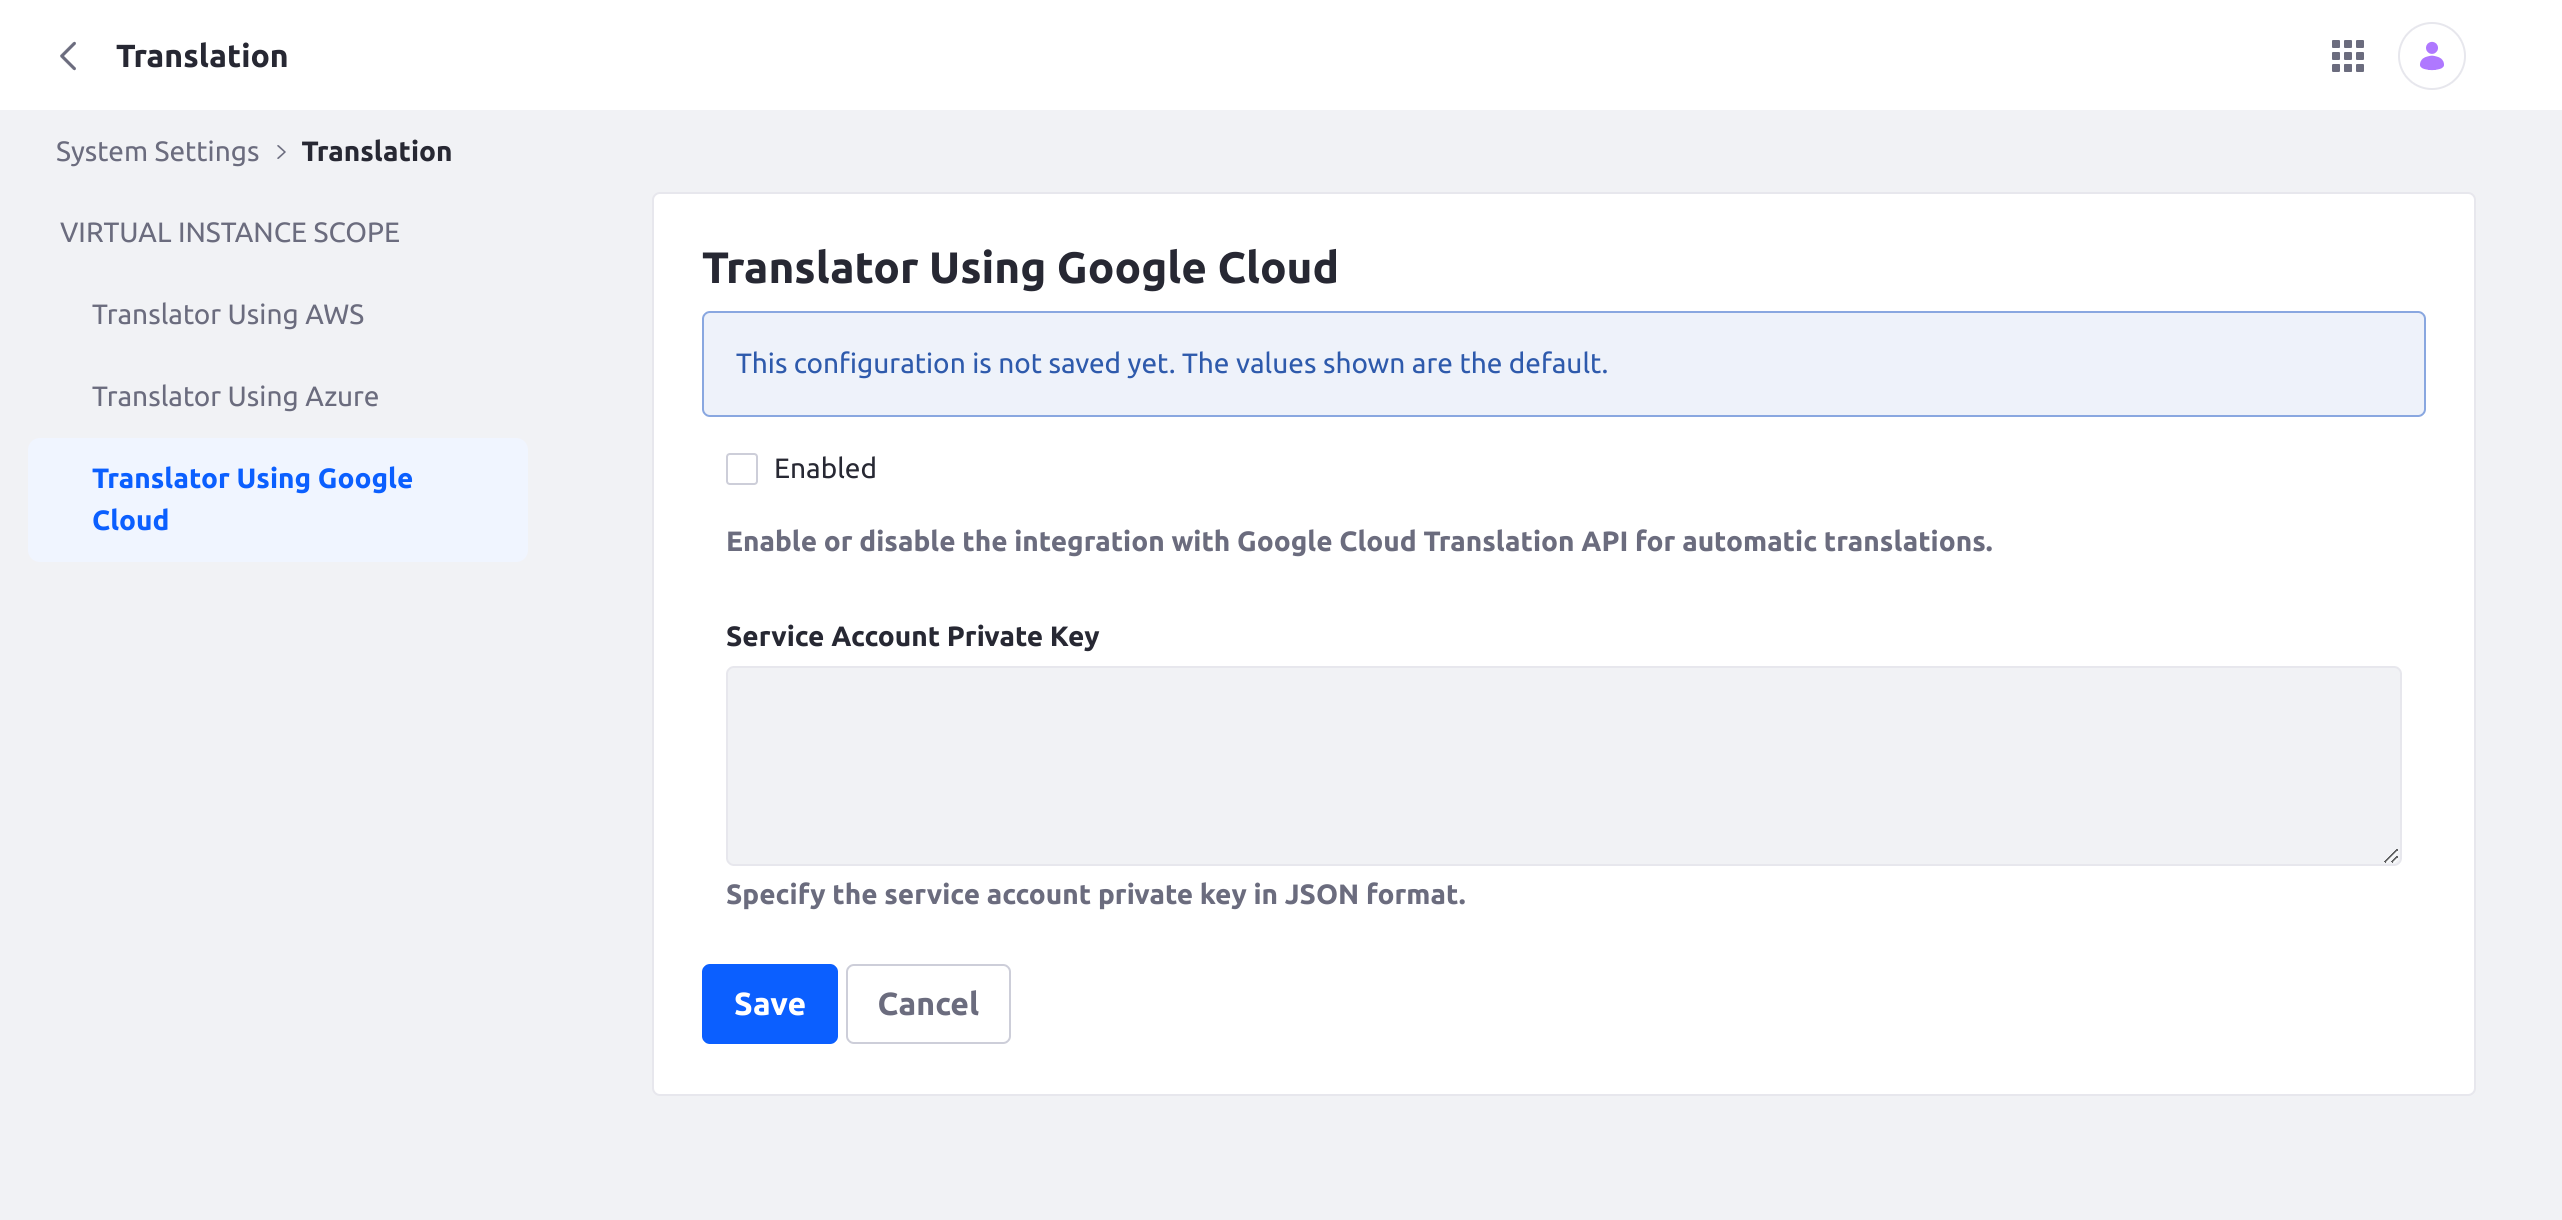 Go to Translator Using Google Cloud.